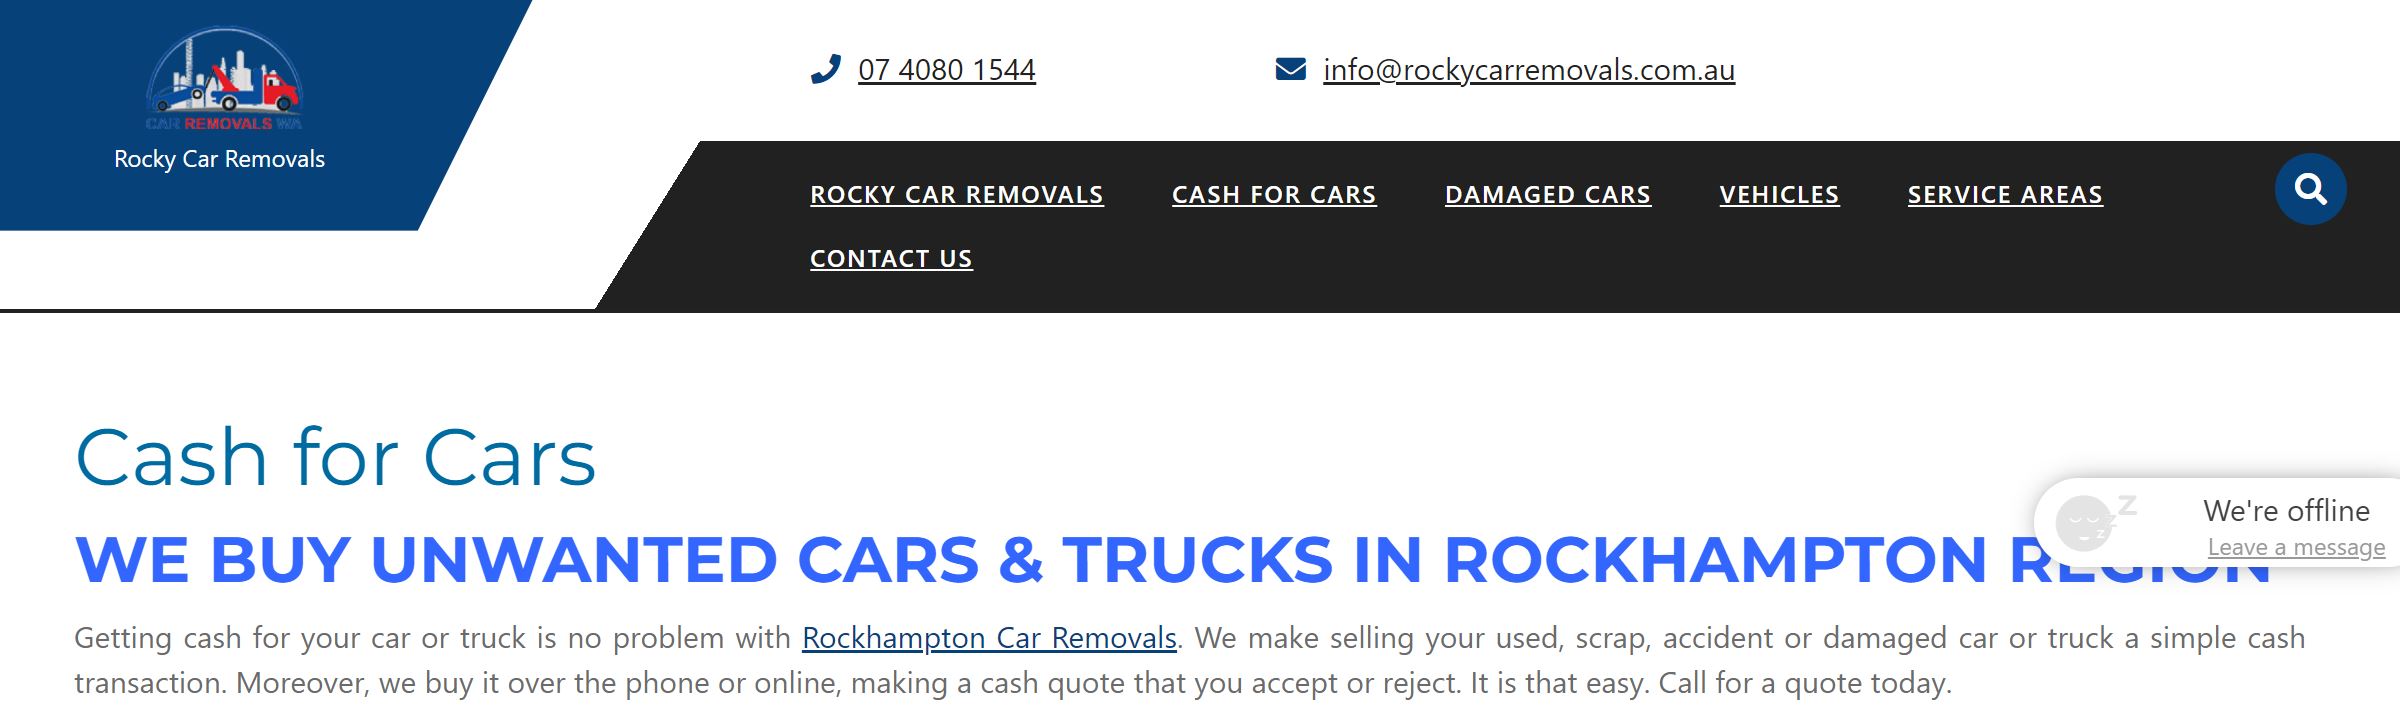 Rocky Car Removals